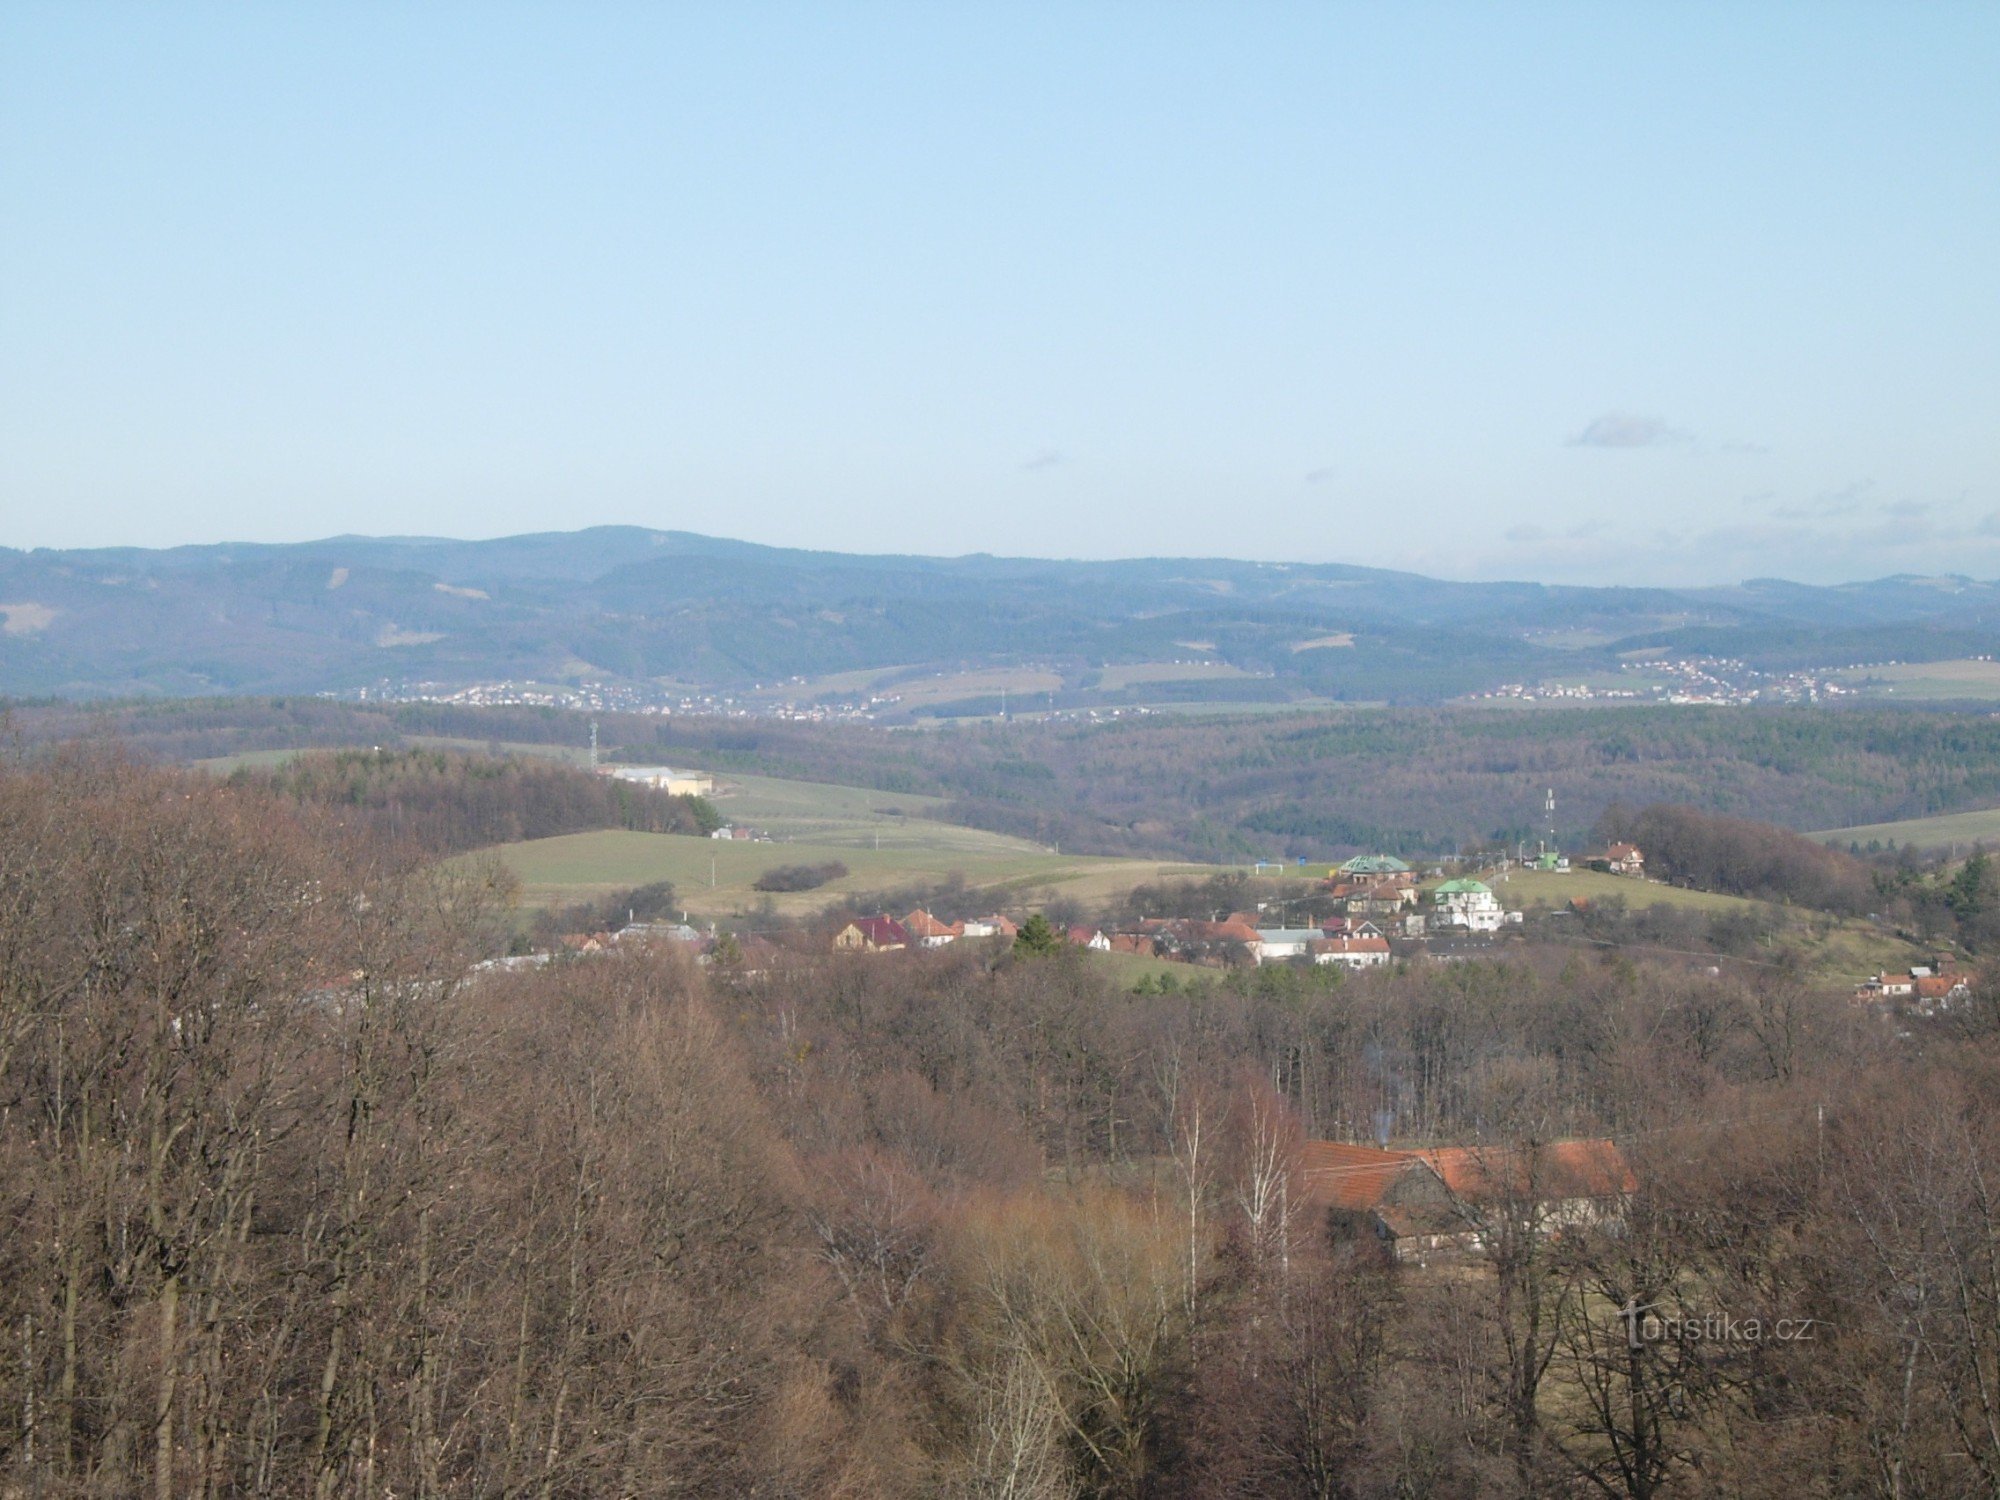 Hostýnská vrchy на заднем плане, деревня Ярославице на переднем плане